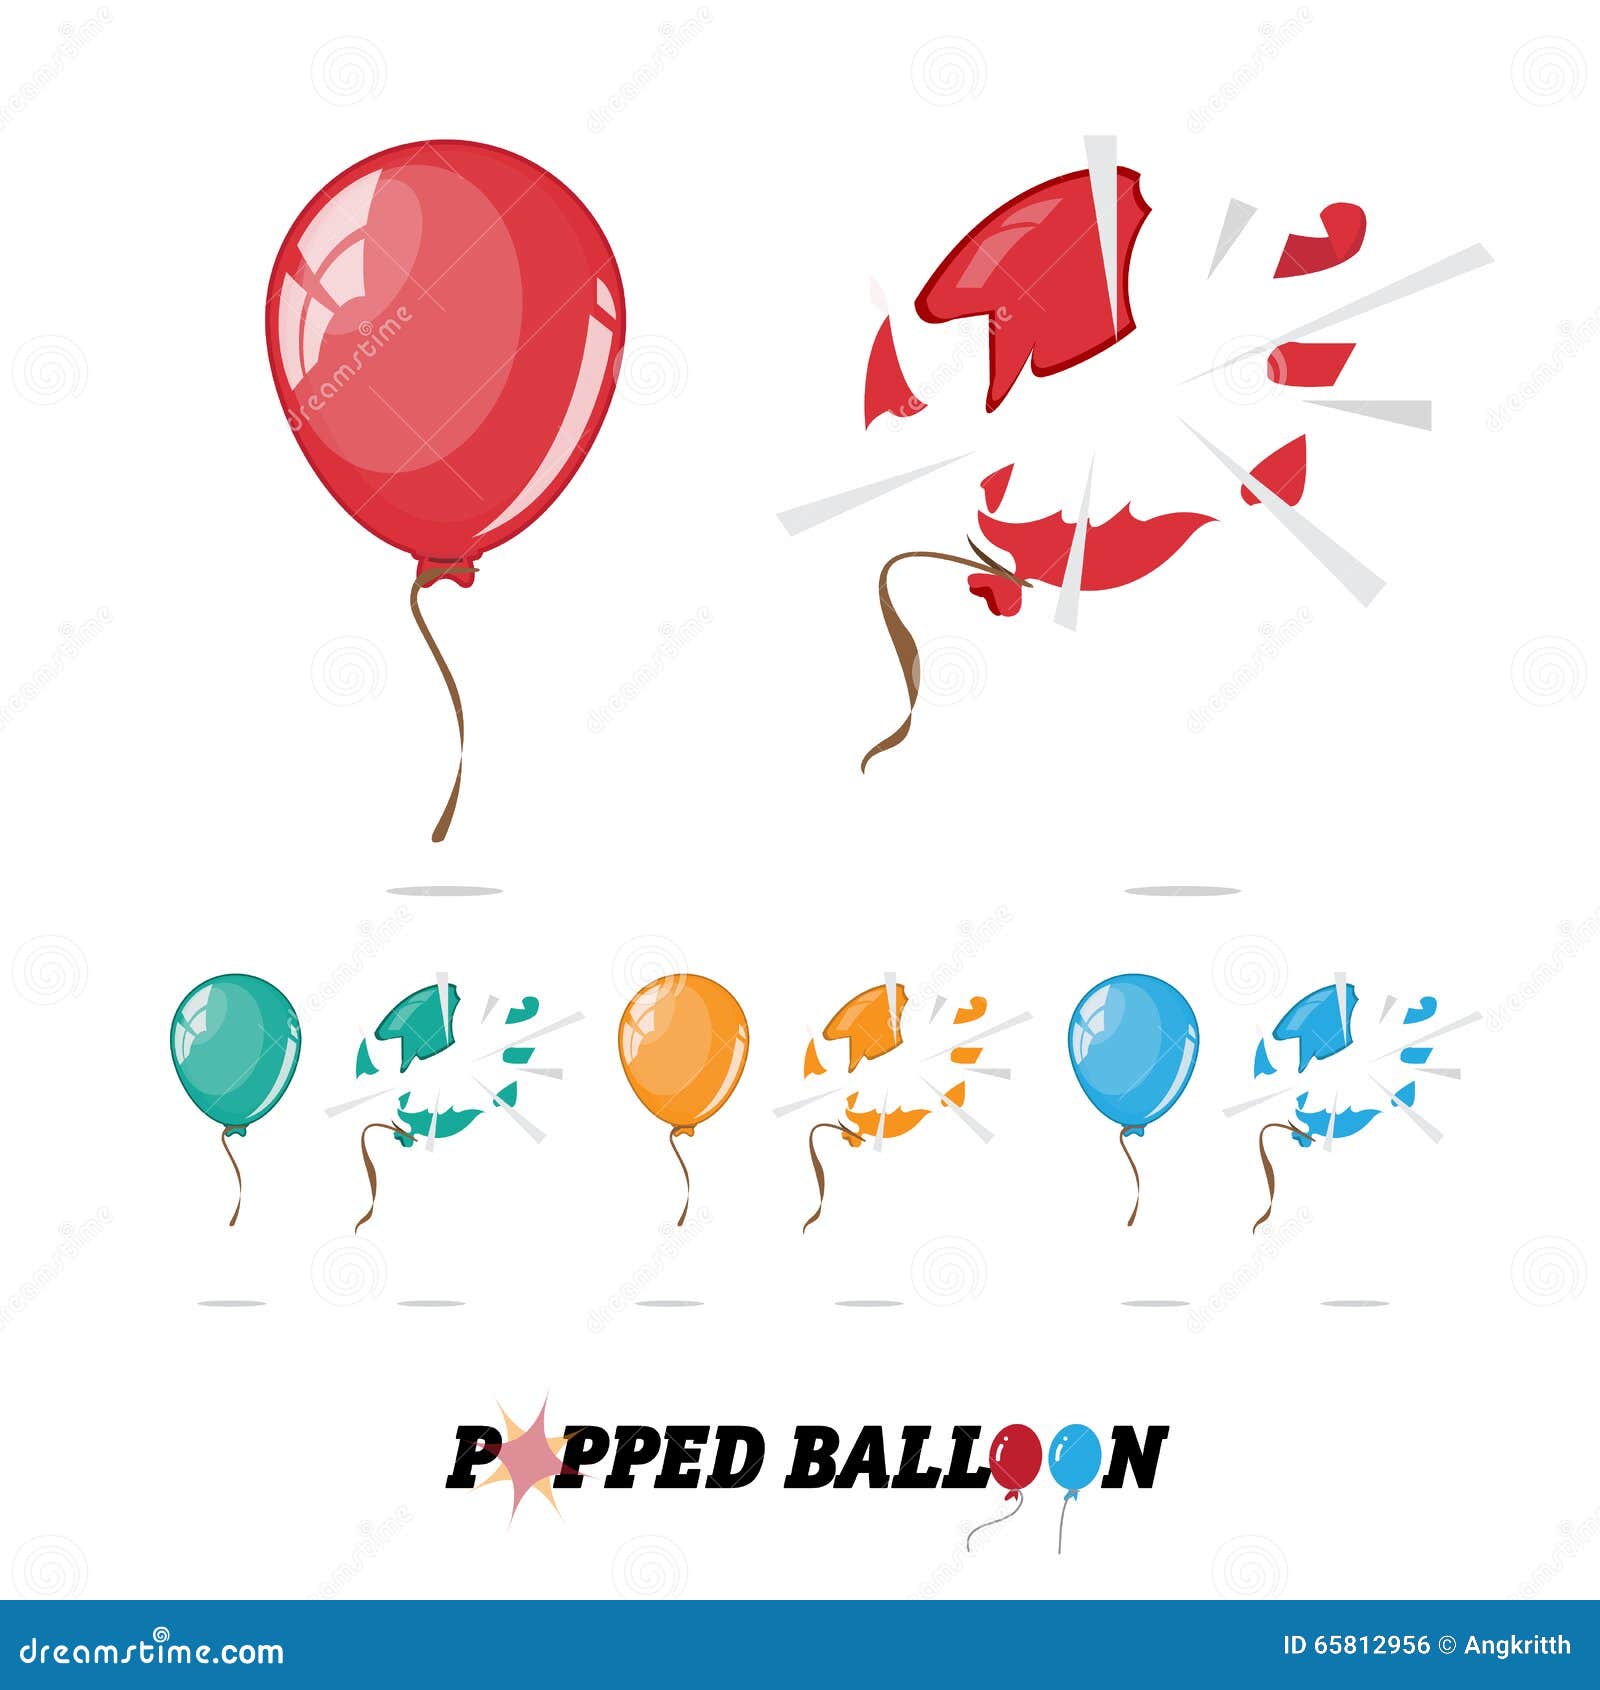 balloon pop clipart - photo #7